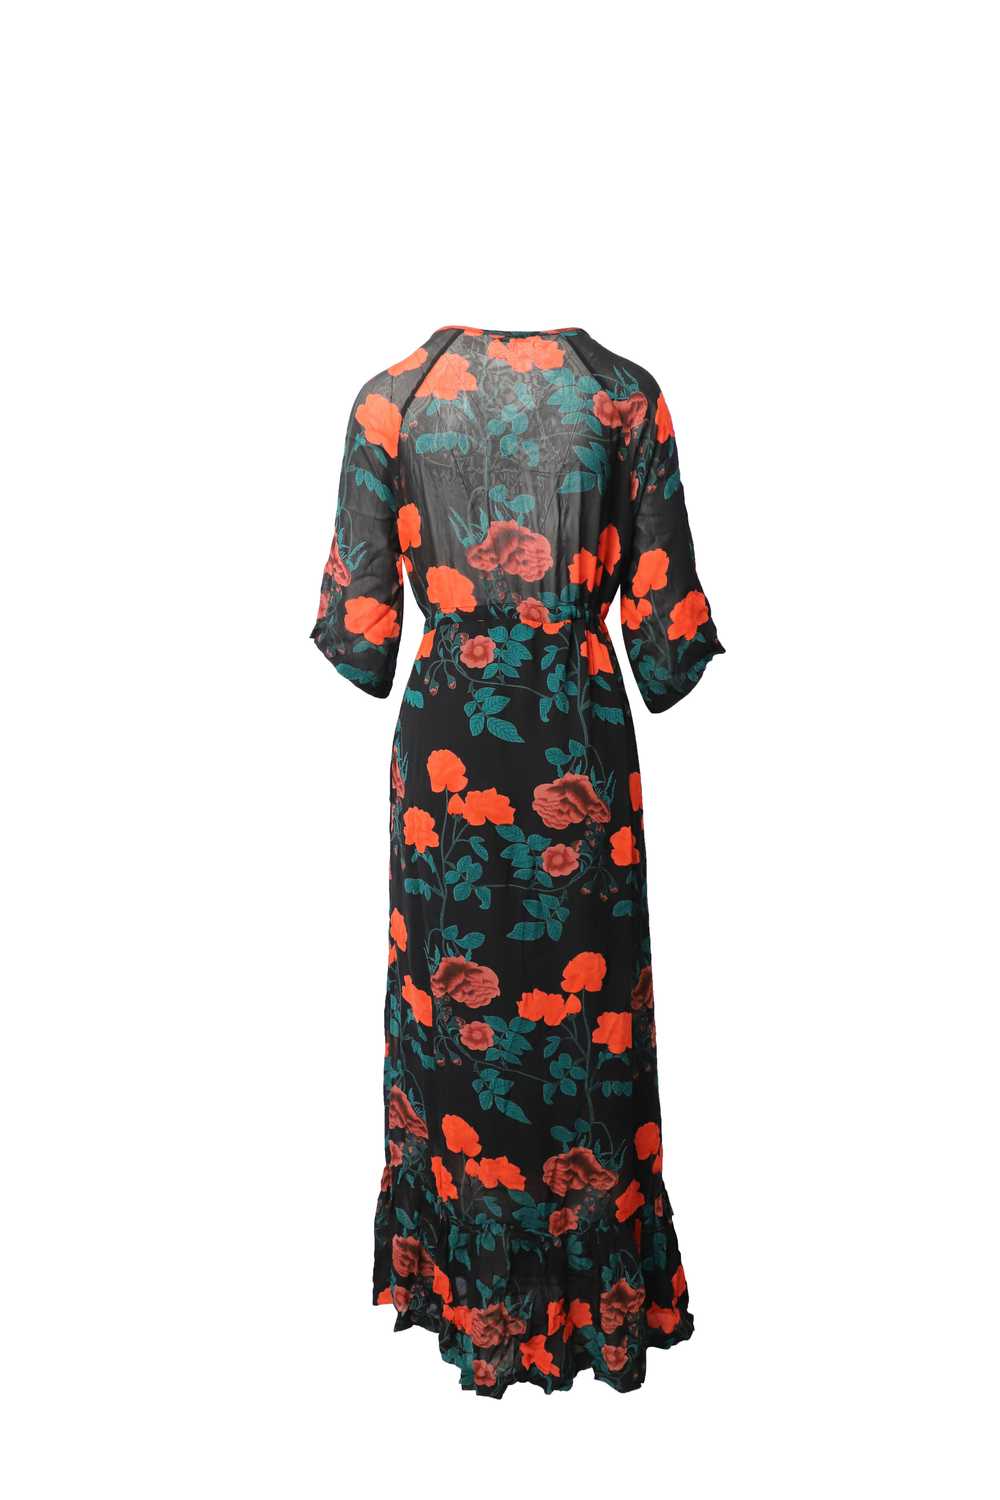 Ganni Black floral print georgette Newman dress - image 3